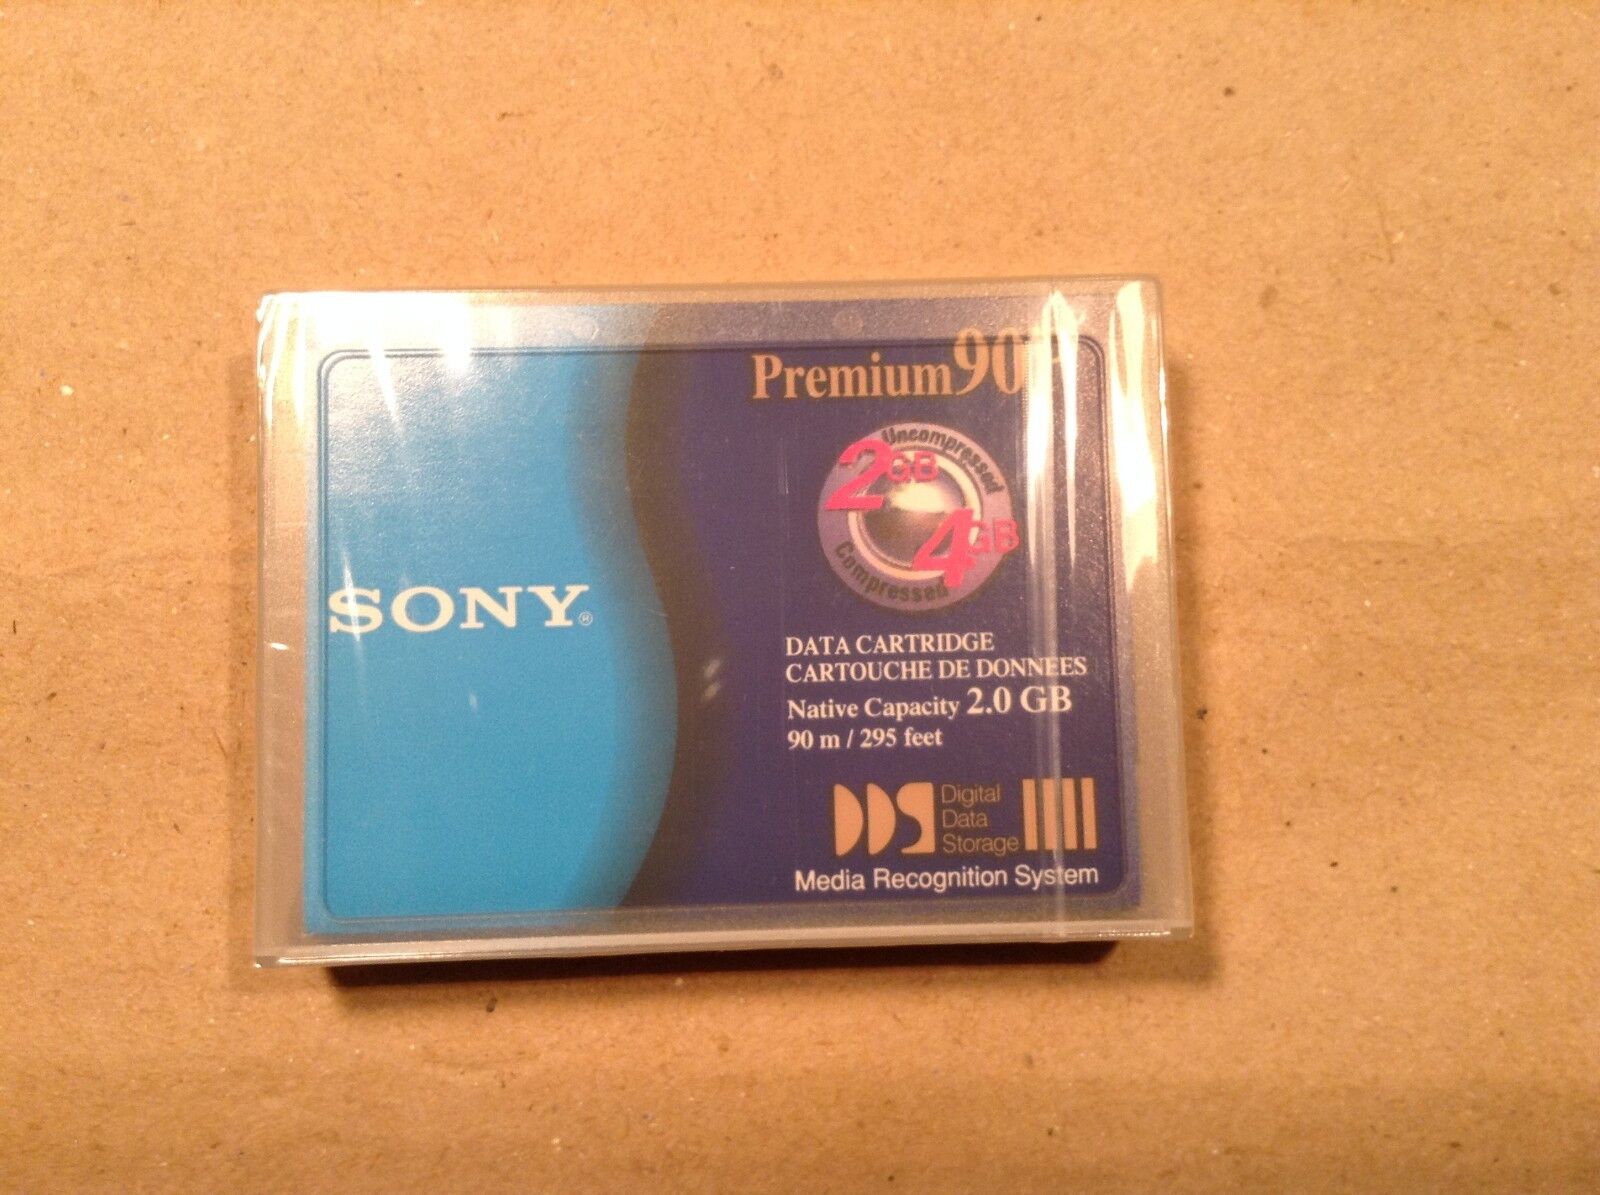 Sony Premium 90P DDS Data Cartridge DG90P 2GB/4GB New & Sealed